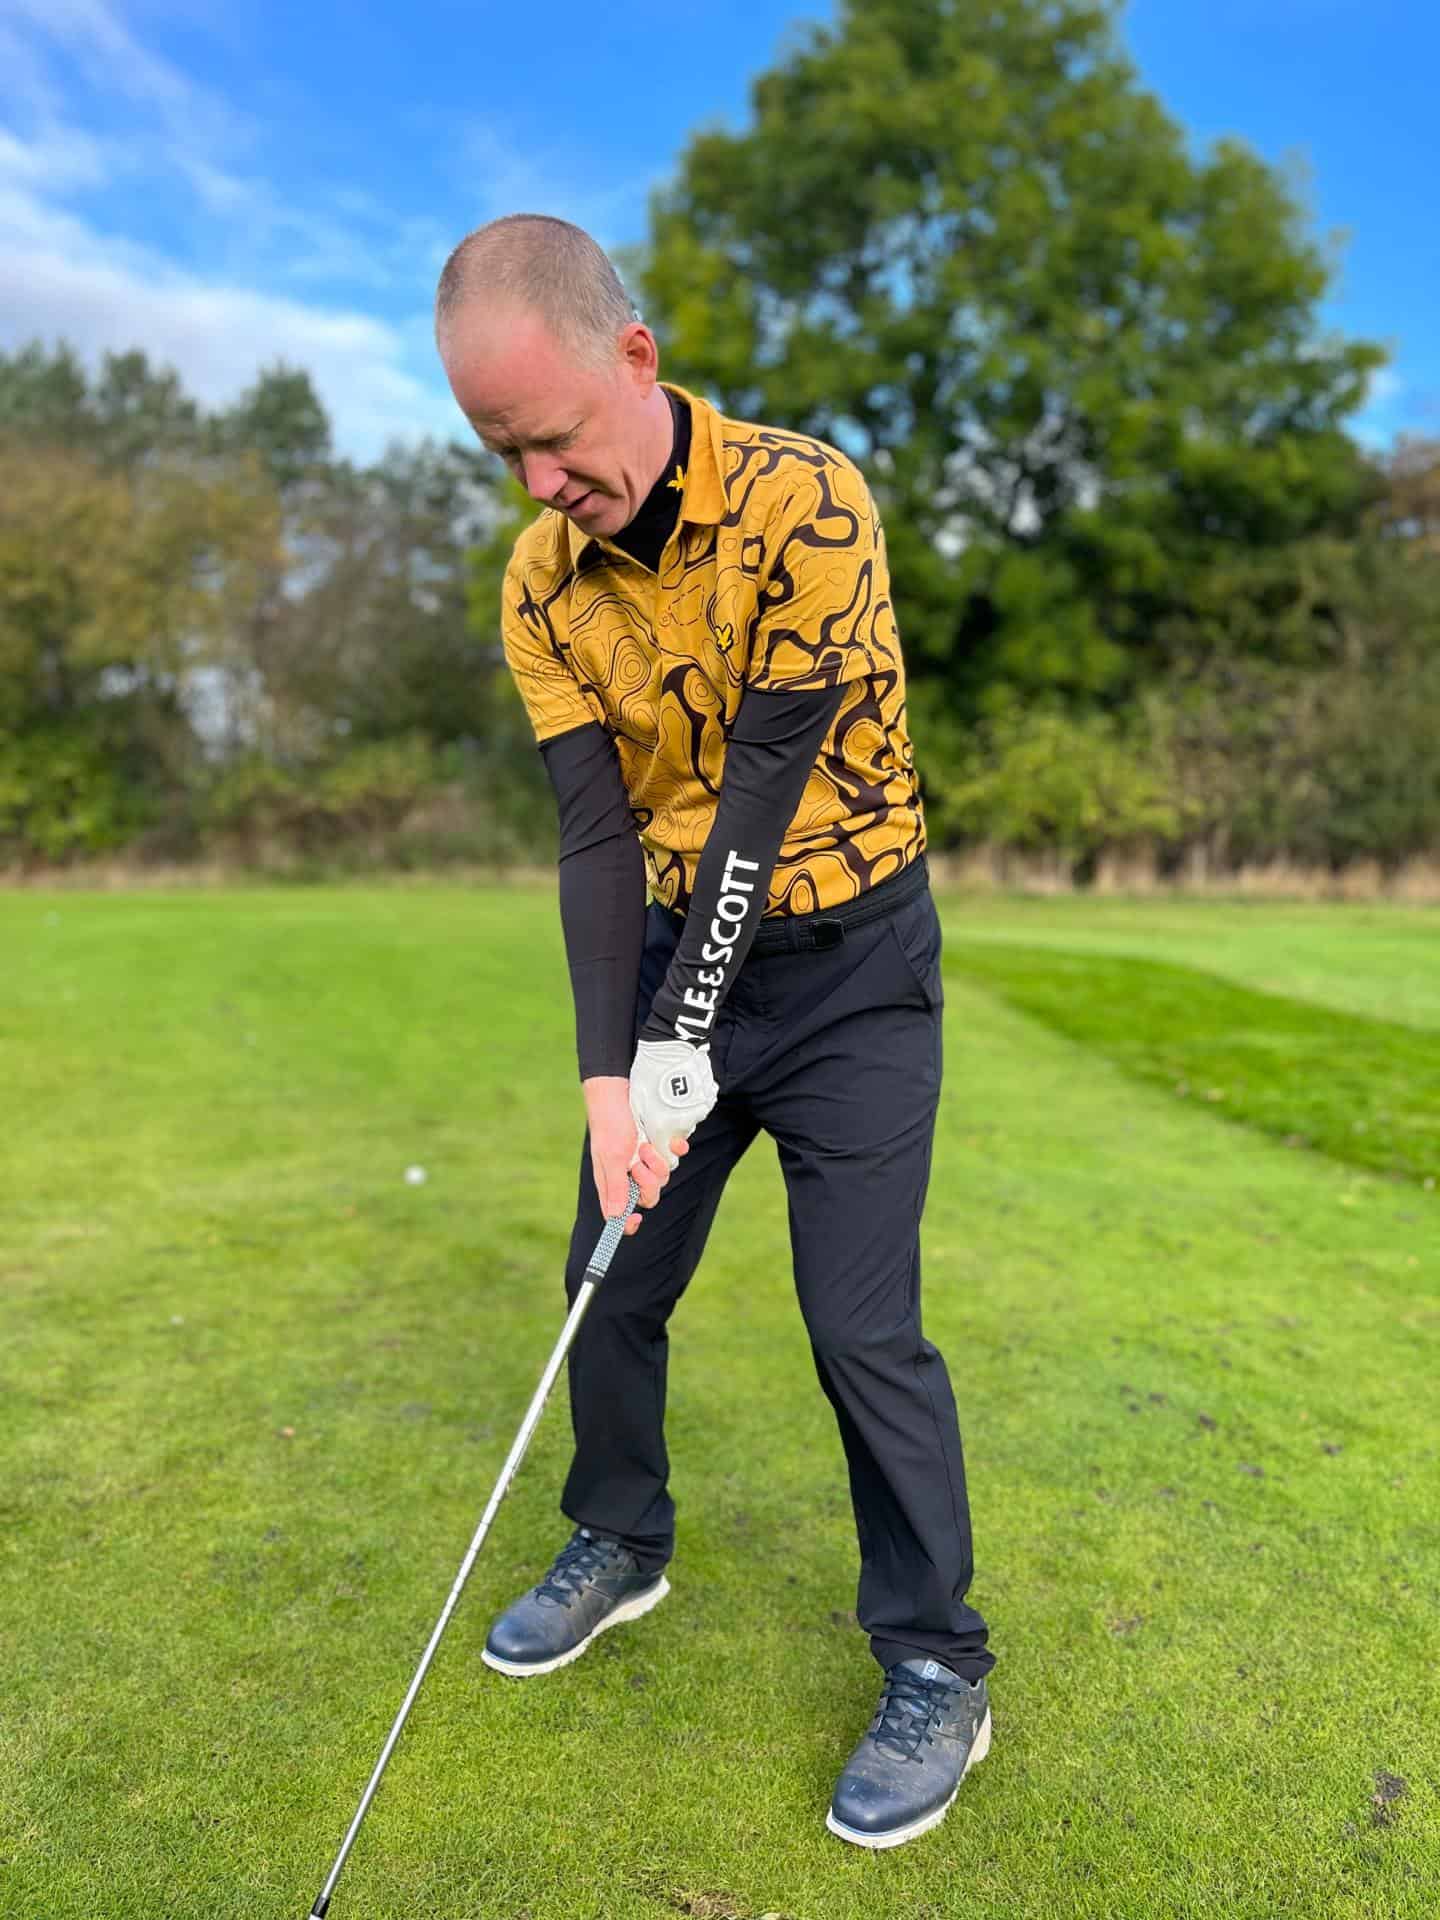 Lyle & Scott Golf Contour Polo shirt review